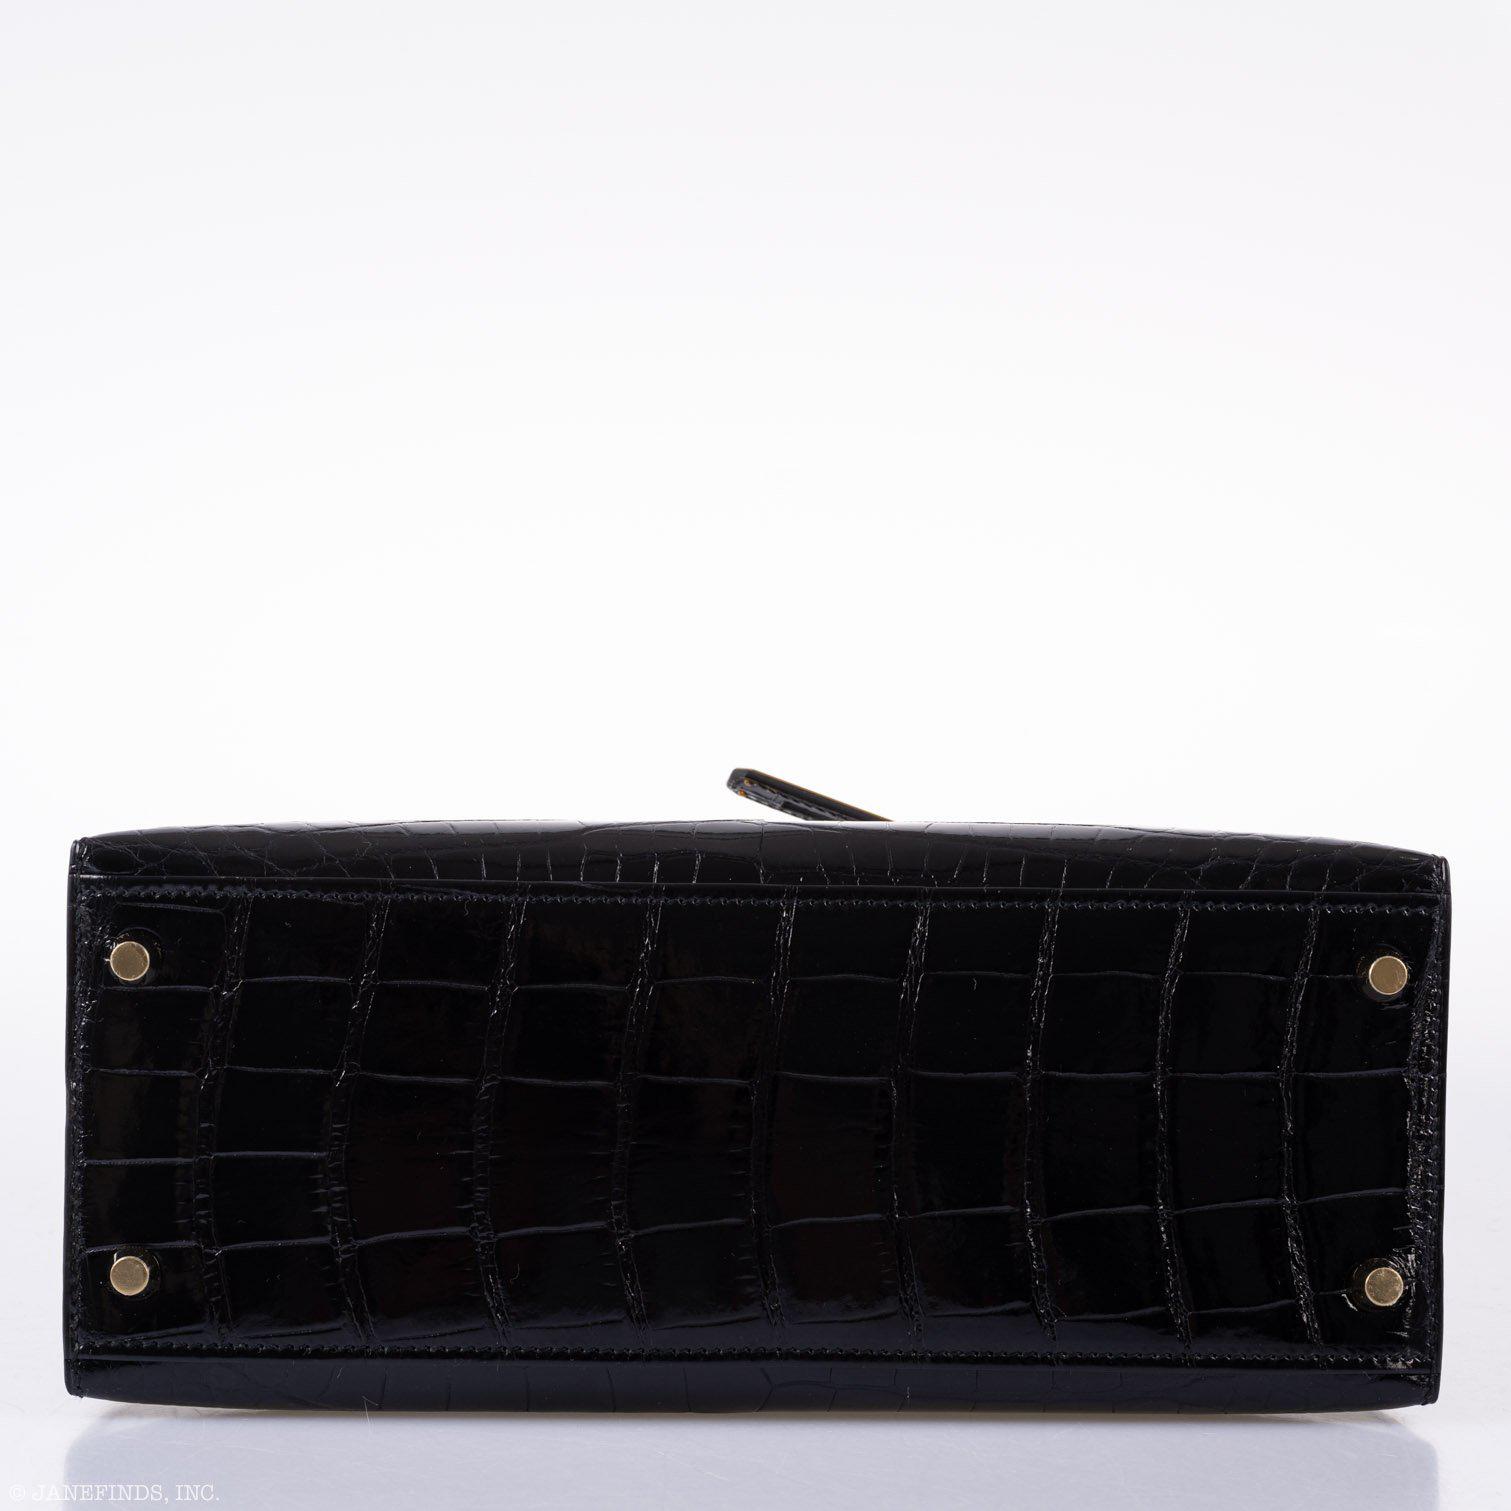 Hermès Kelly 28 Sellier Black Shiny Alligator with Gold Hardware - 2020, Y